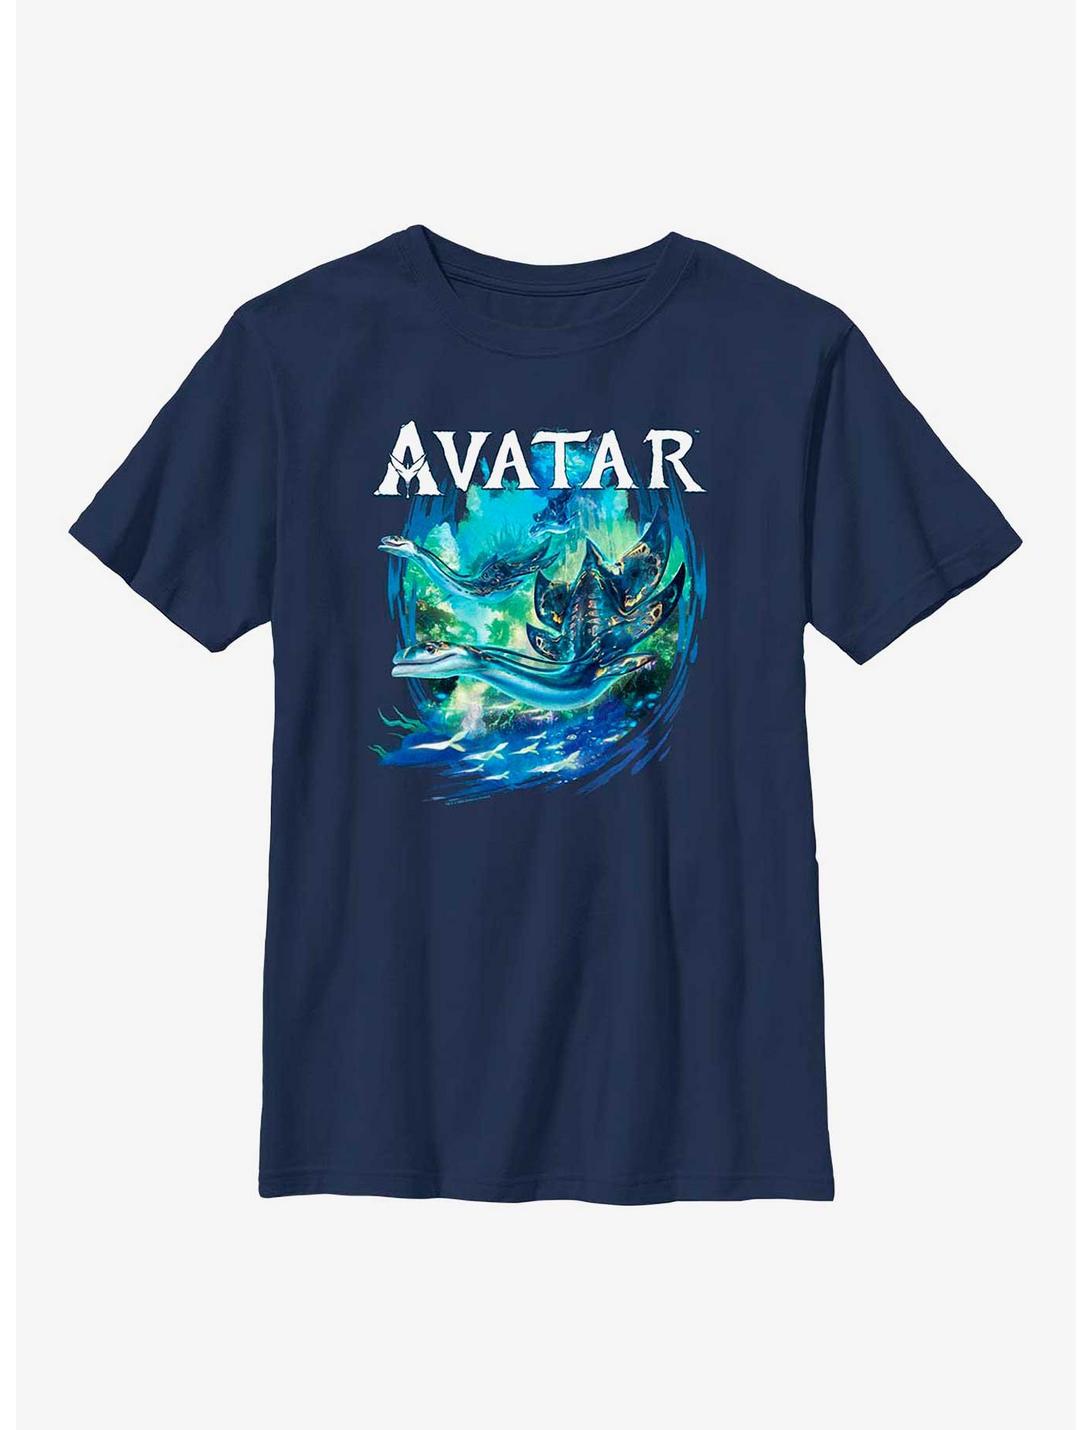 Avatar: The Way Of The Water Explore Pandora Youth T-Shirt, NAVY, hi-res